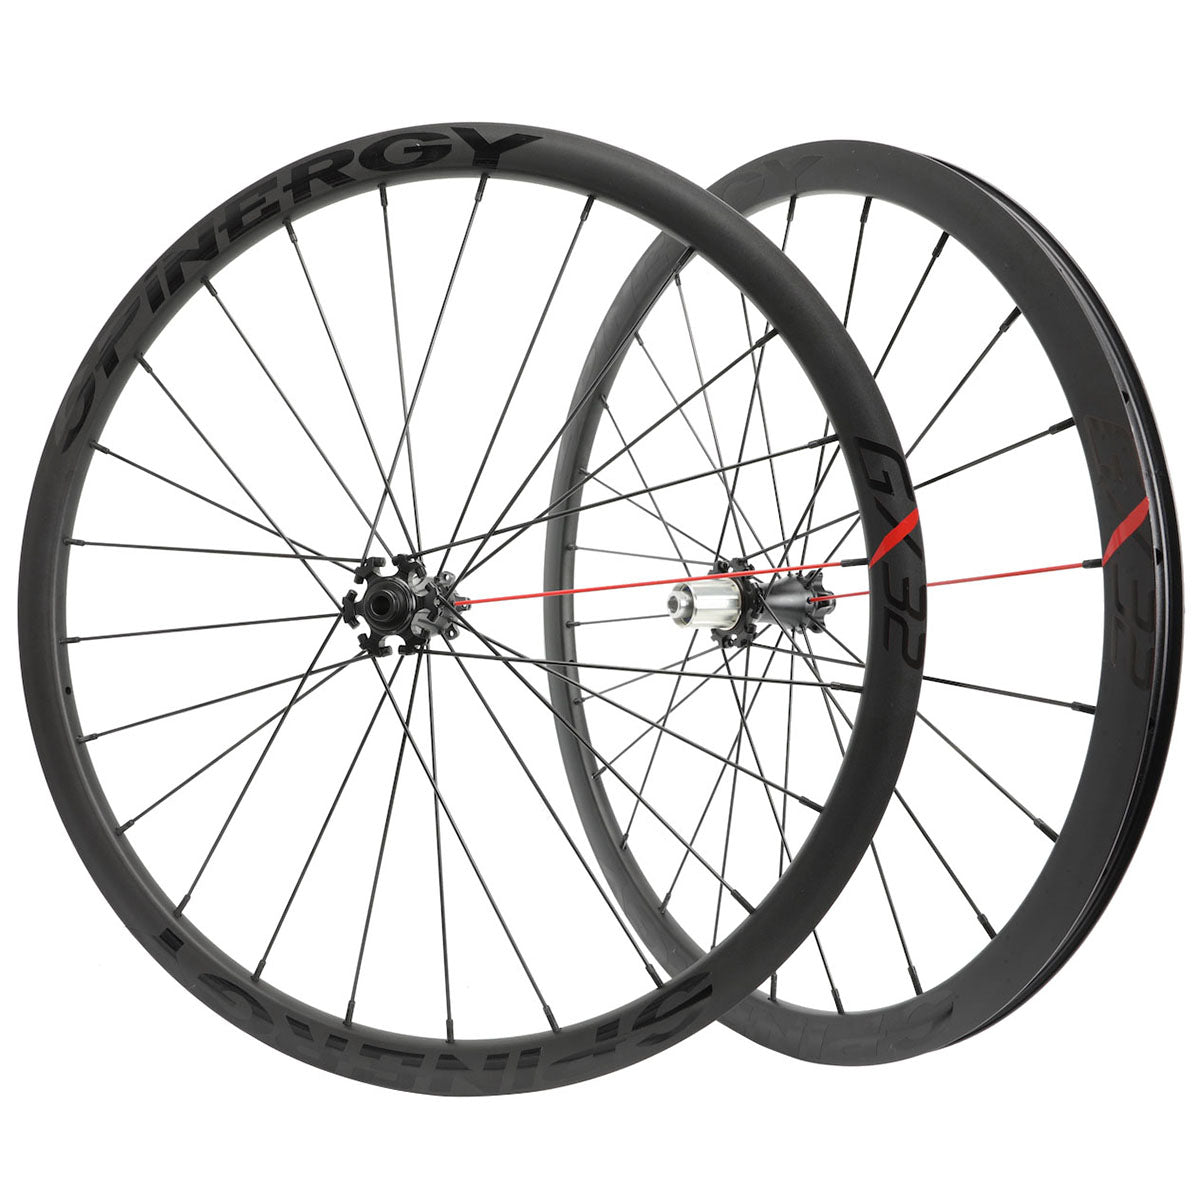 SPINERGY - GX32 700c, 28-40mm Alloy Centerlock Bicycle Wheel Set - Gravel/CX - 2021 w/ "44" Hub